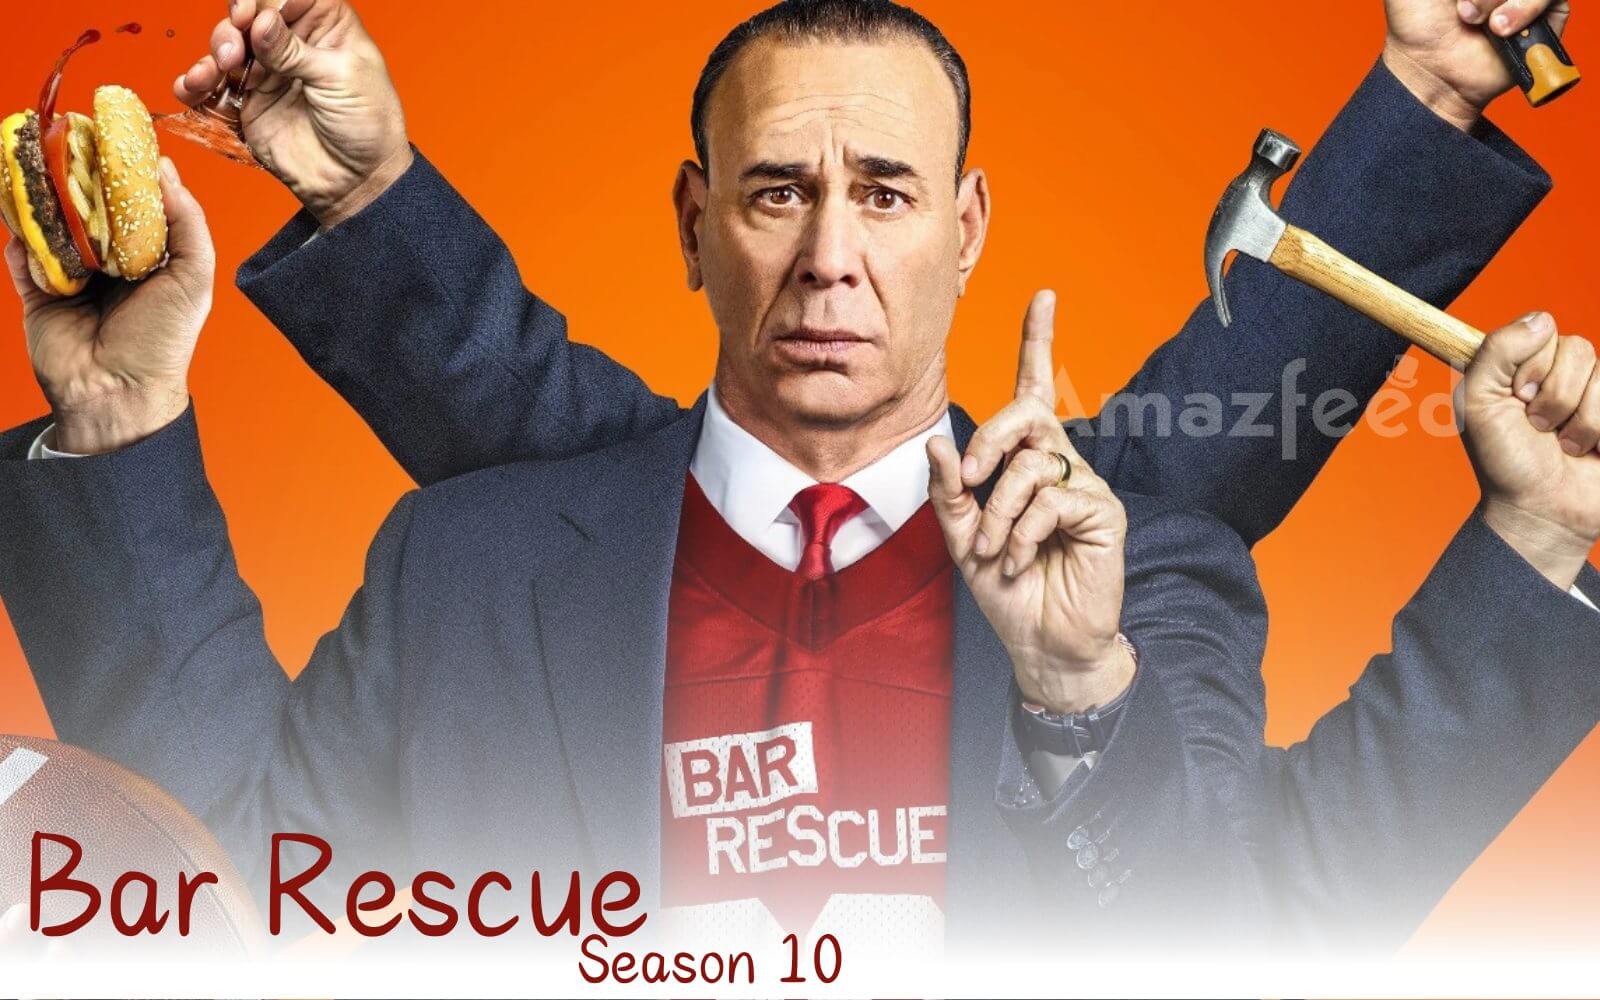 Bar Rescue Season 10 release date